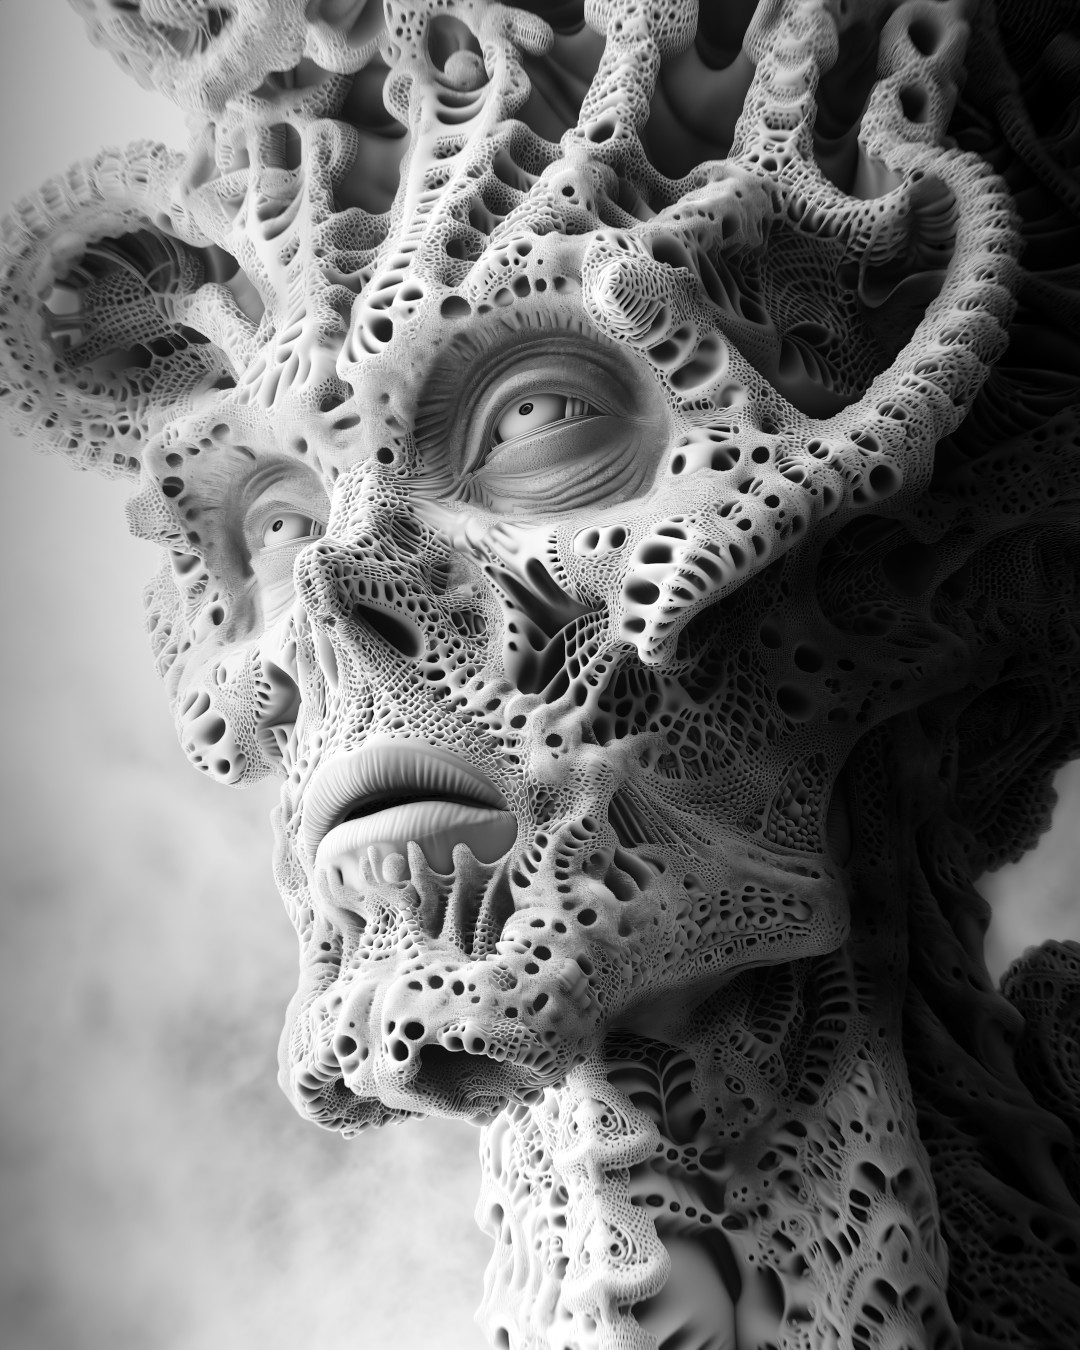 Otherworldly skull, cellular formations, monochrome portrait